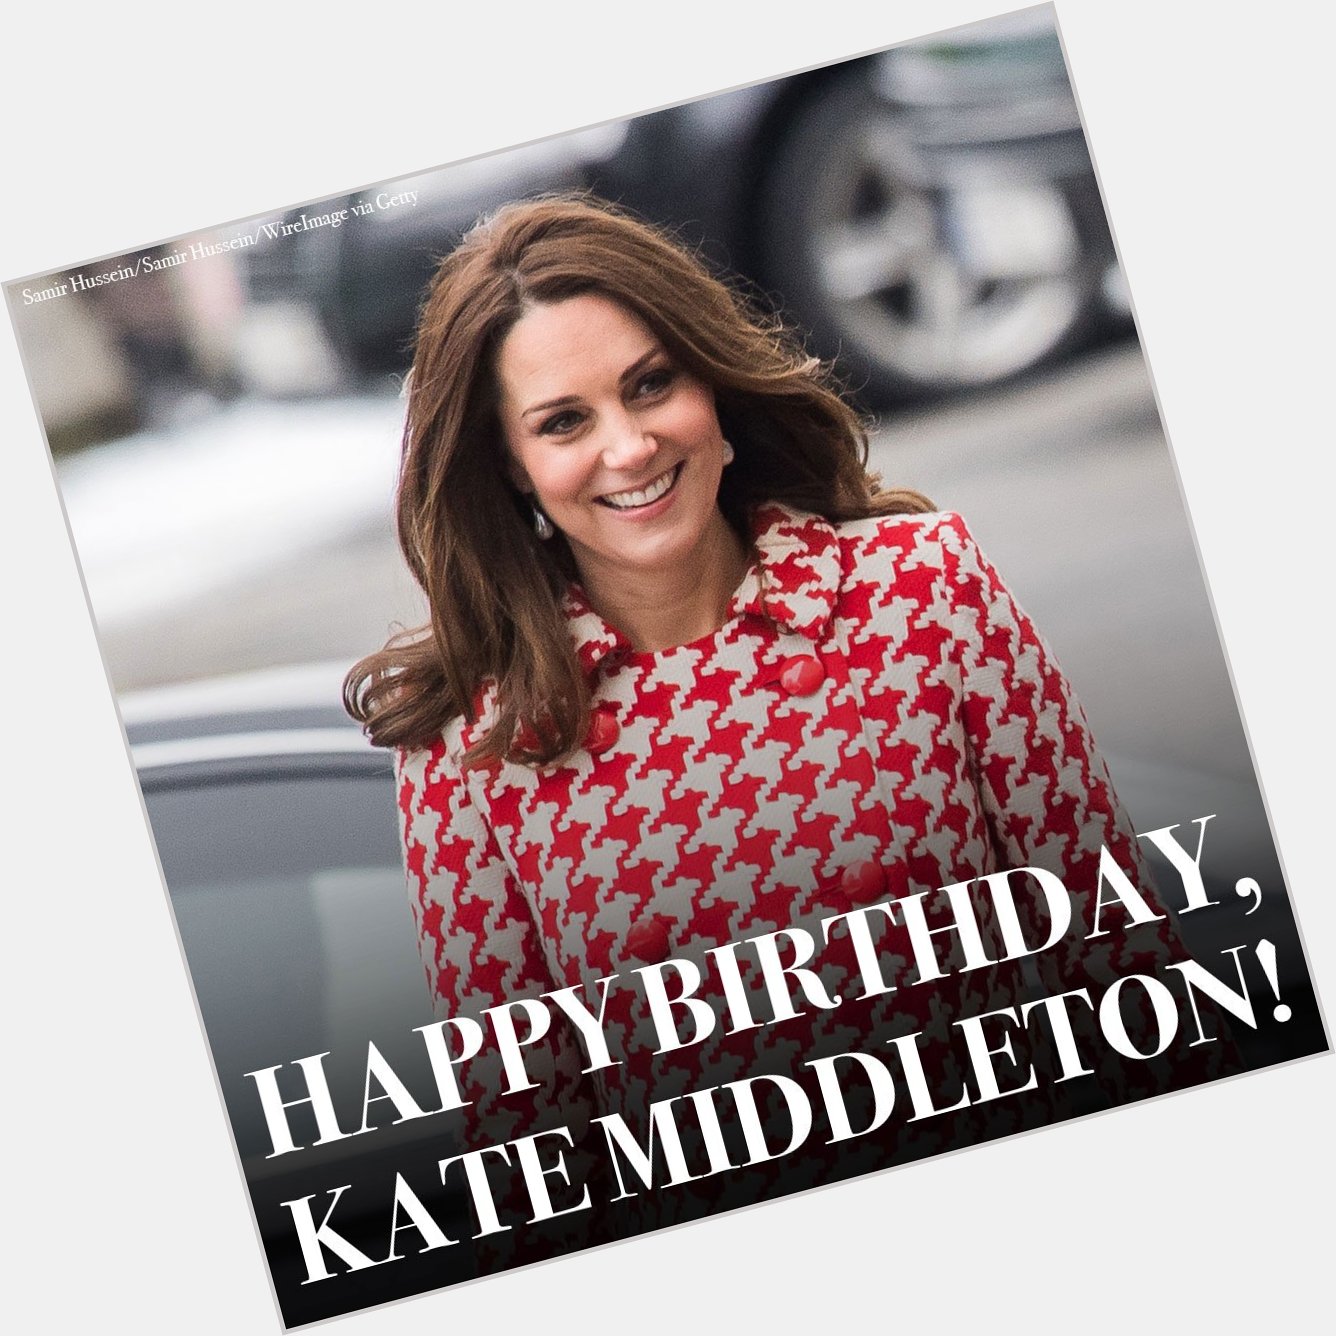 Happy birthday, Kate Middleton! The Duchess of Cambridge turns 37 today   